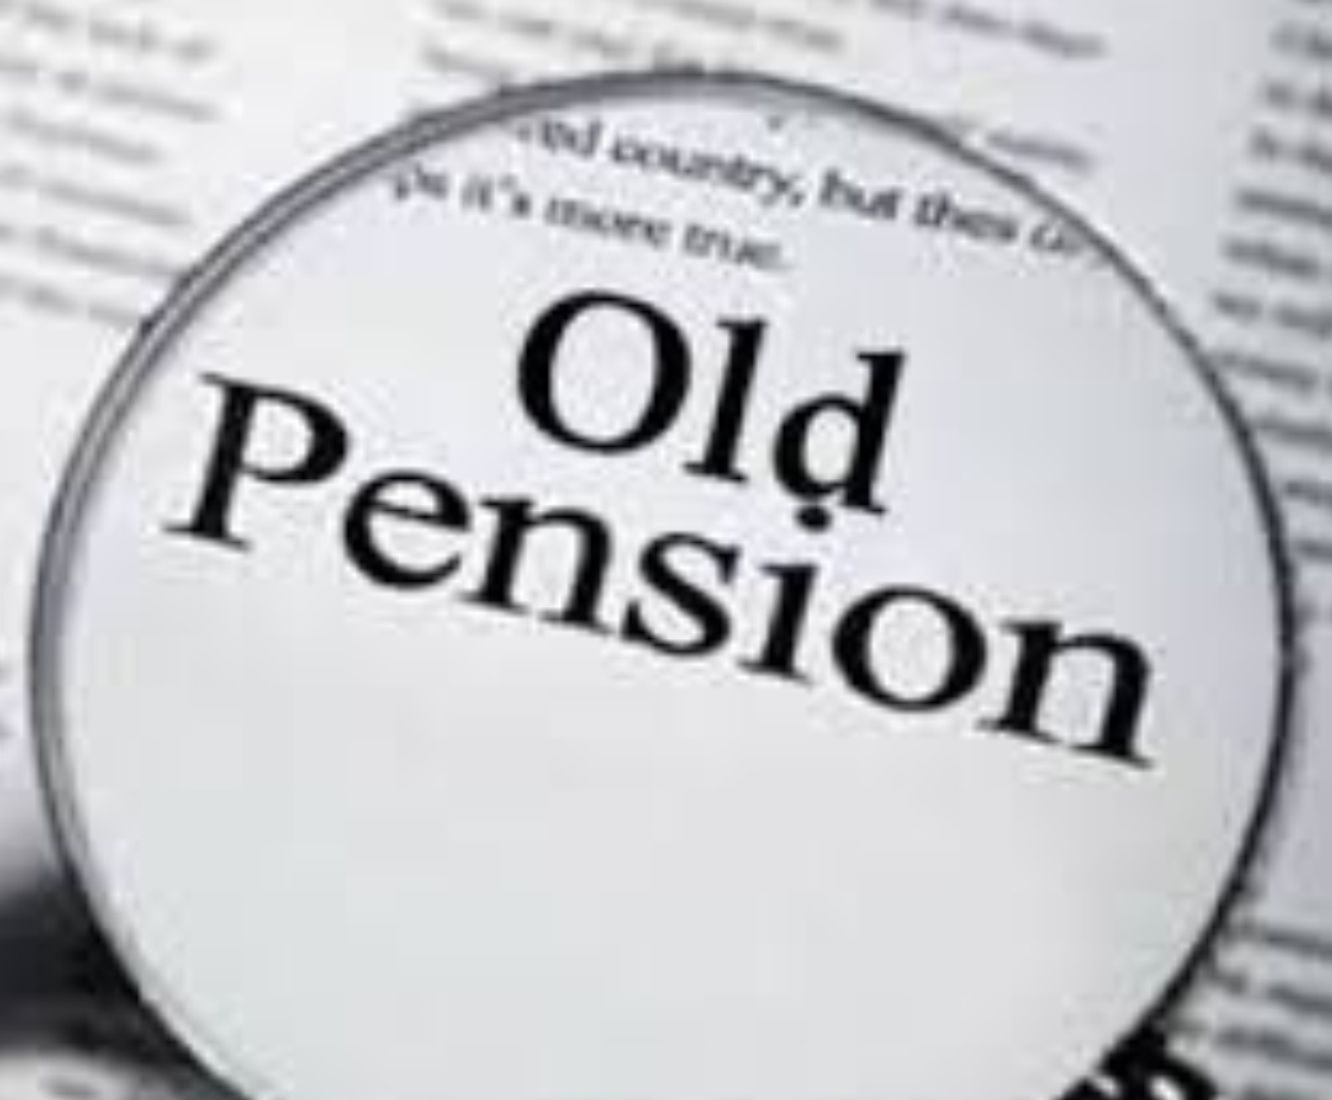 Restoration of Old Pension Scheme: Lok Sabha QA